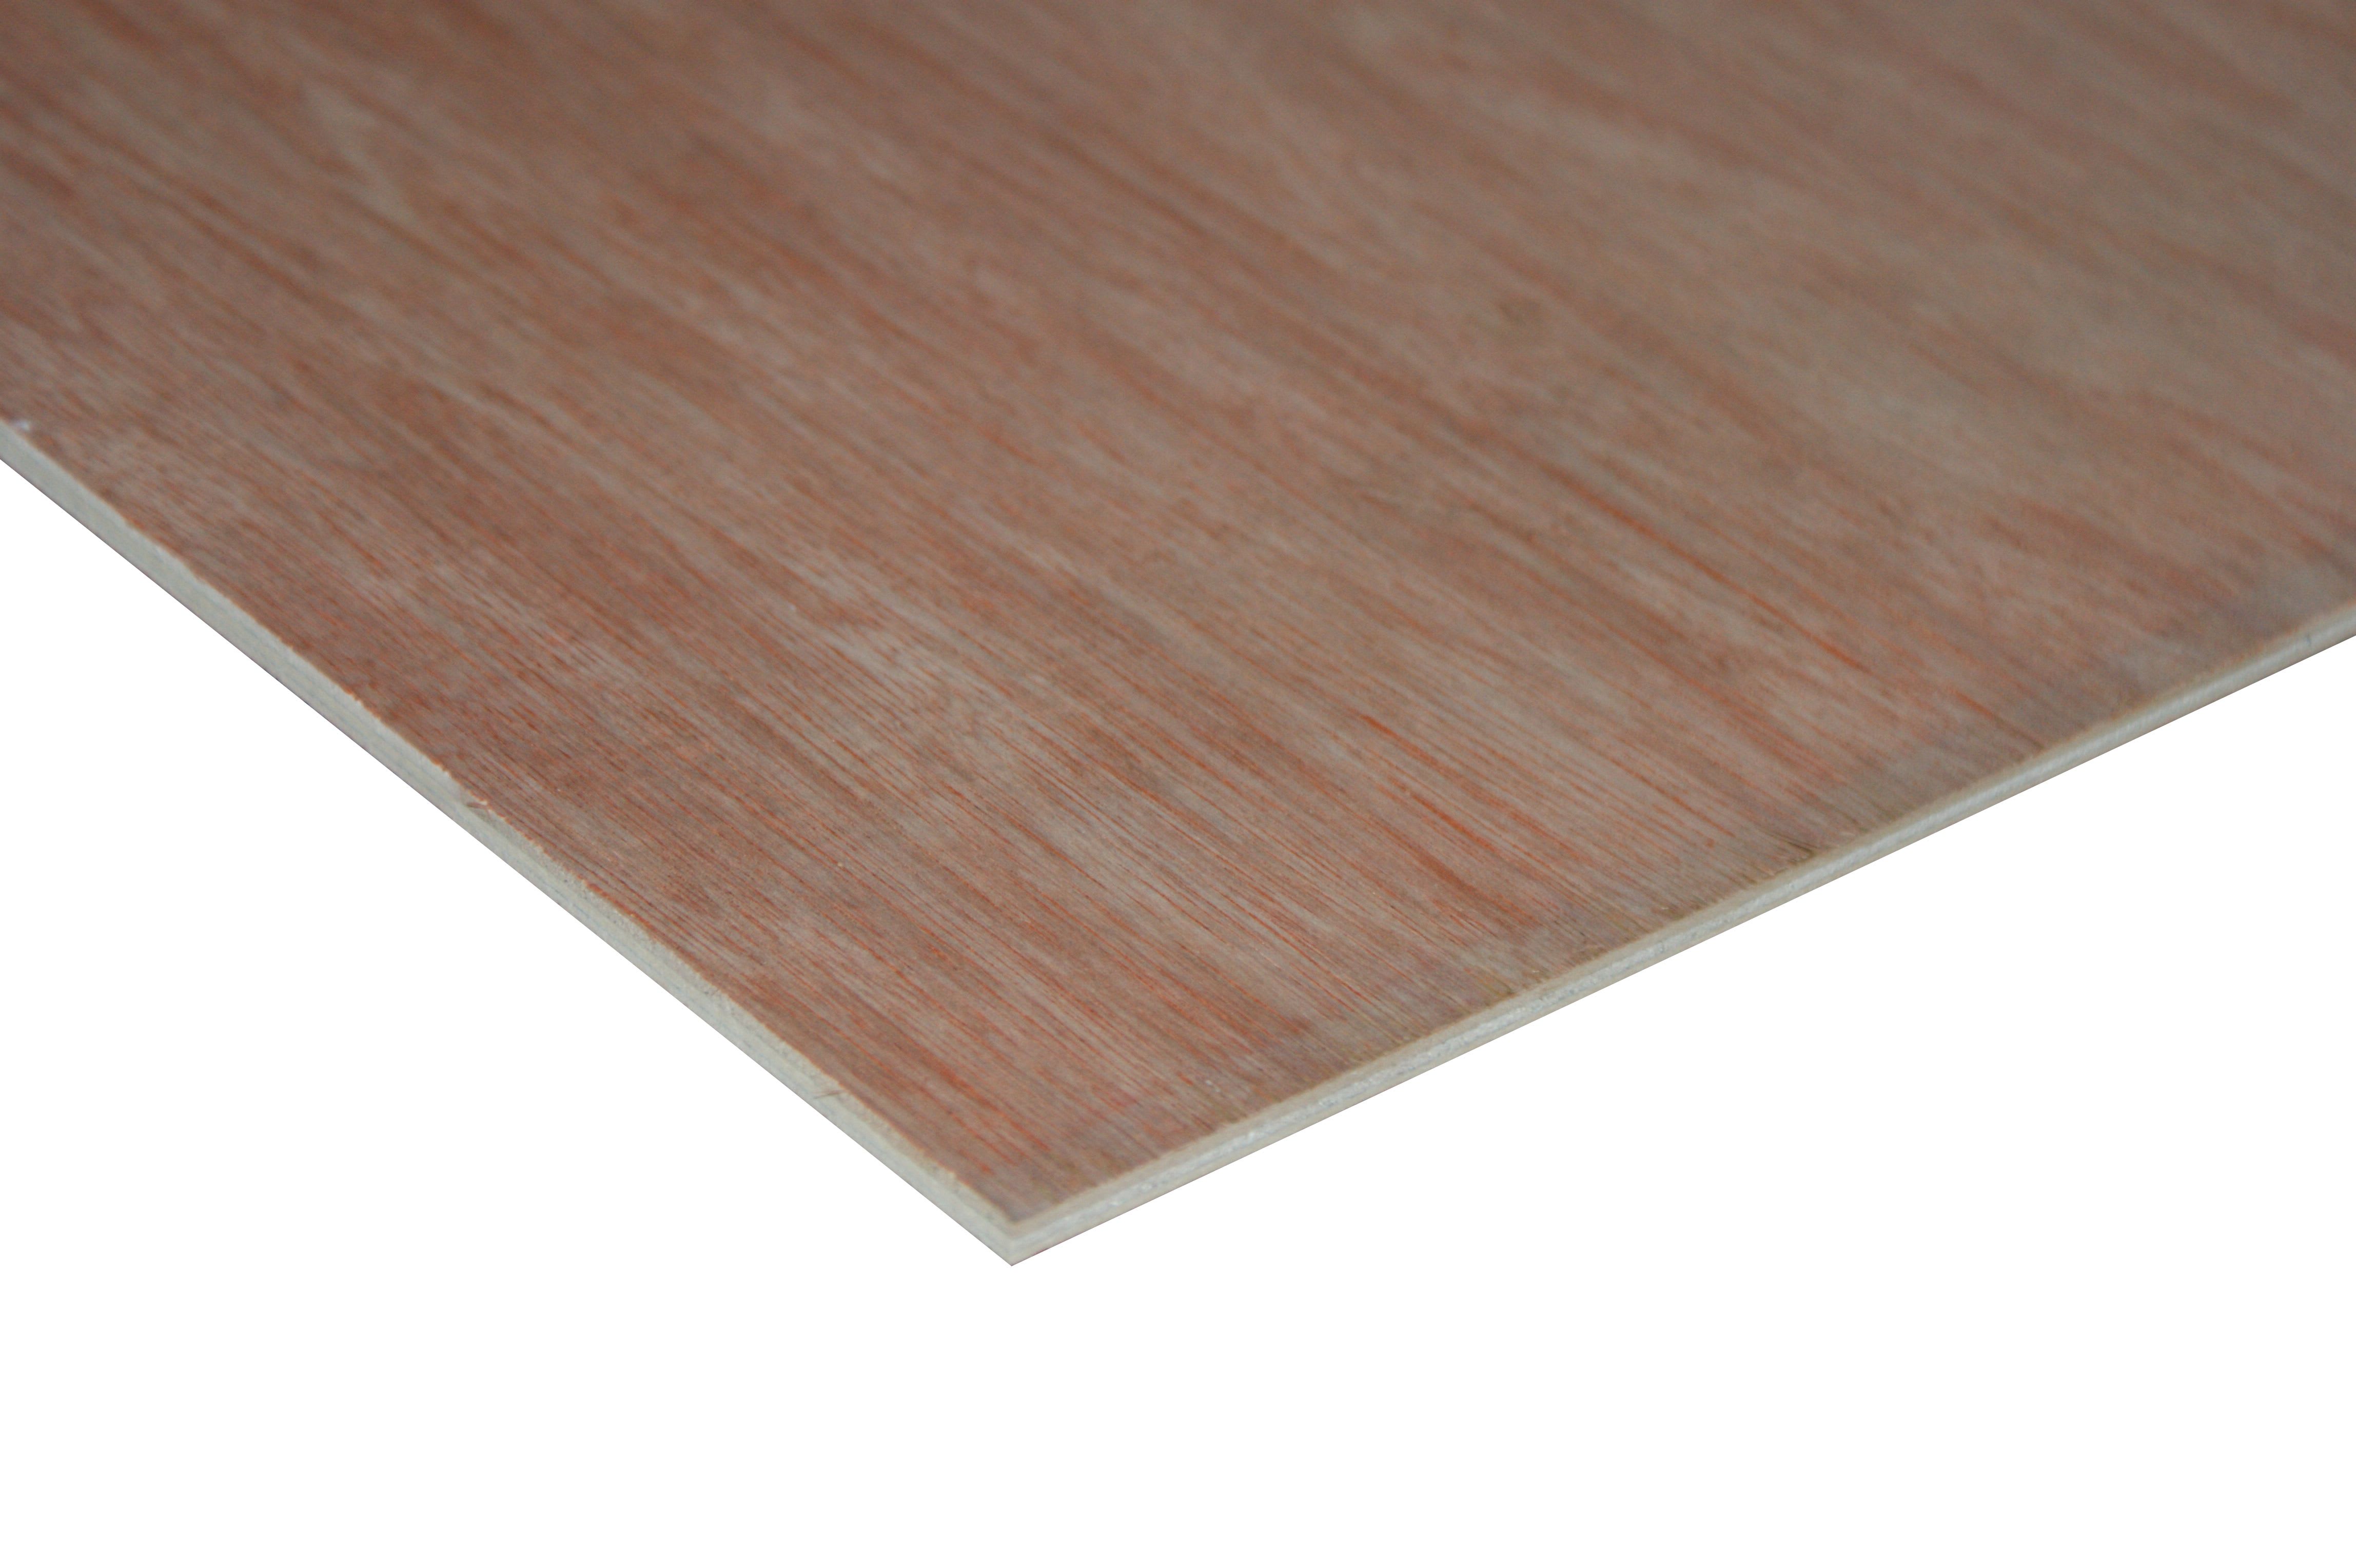 Non-Structural Hardwood Plywood Sheet - 5.5 x 1220